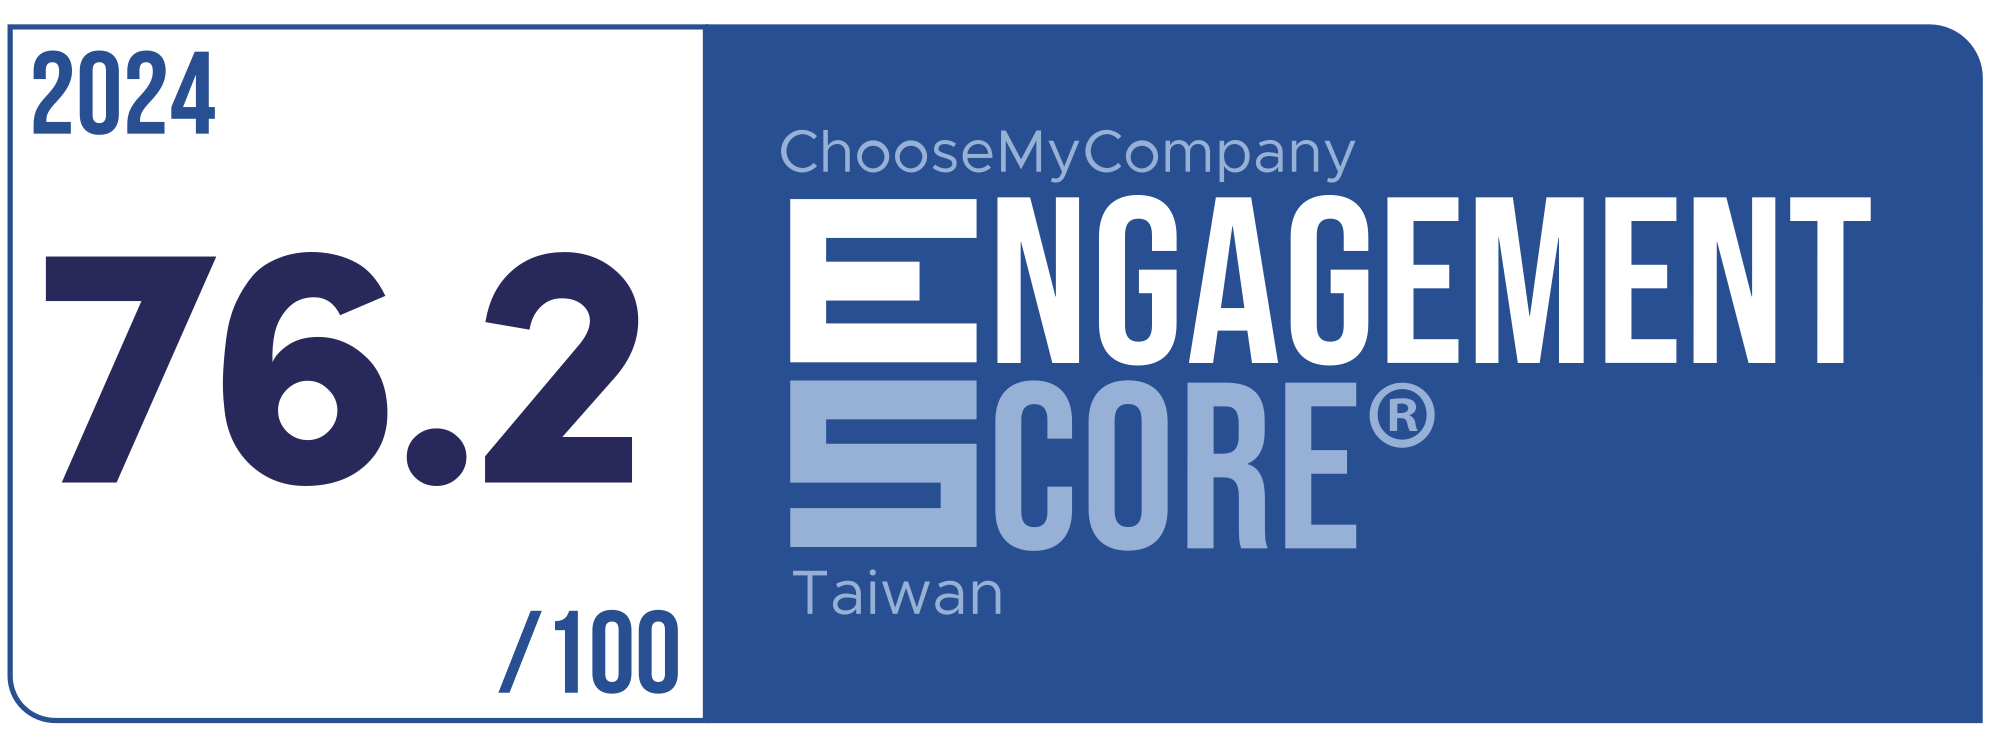 Label Engagement Score 2024 Taiwan